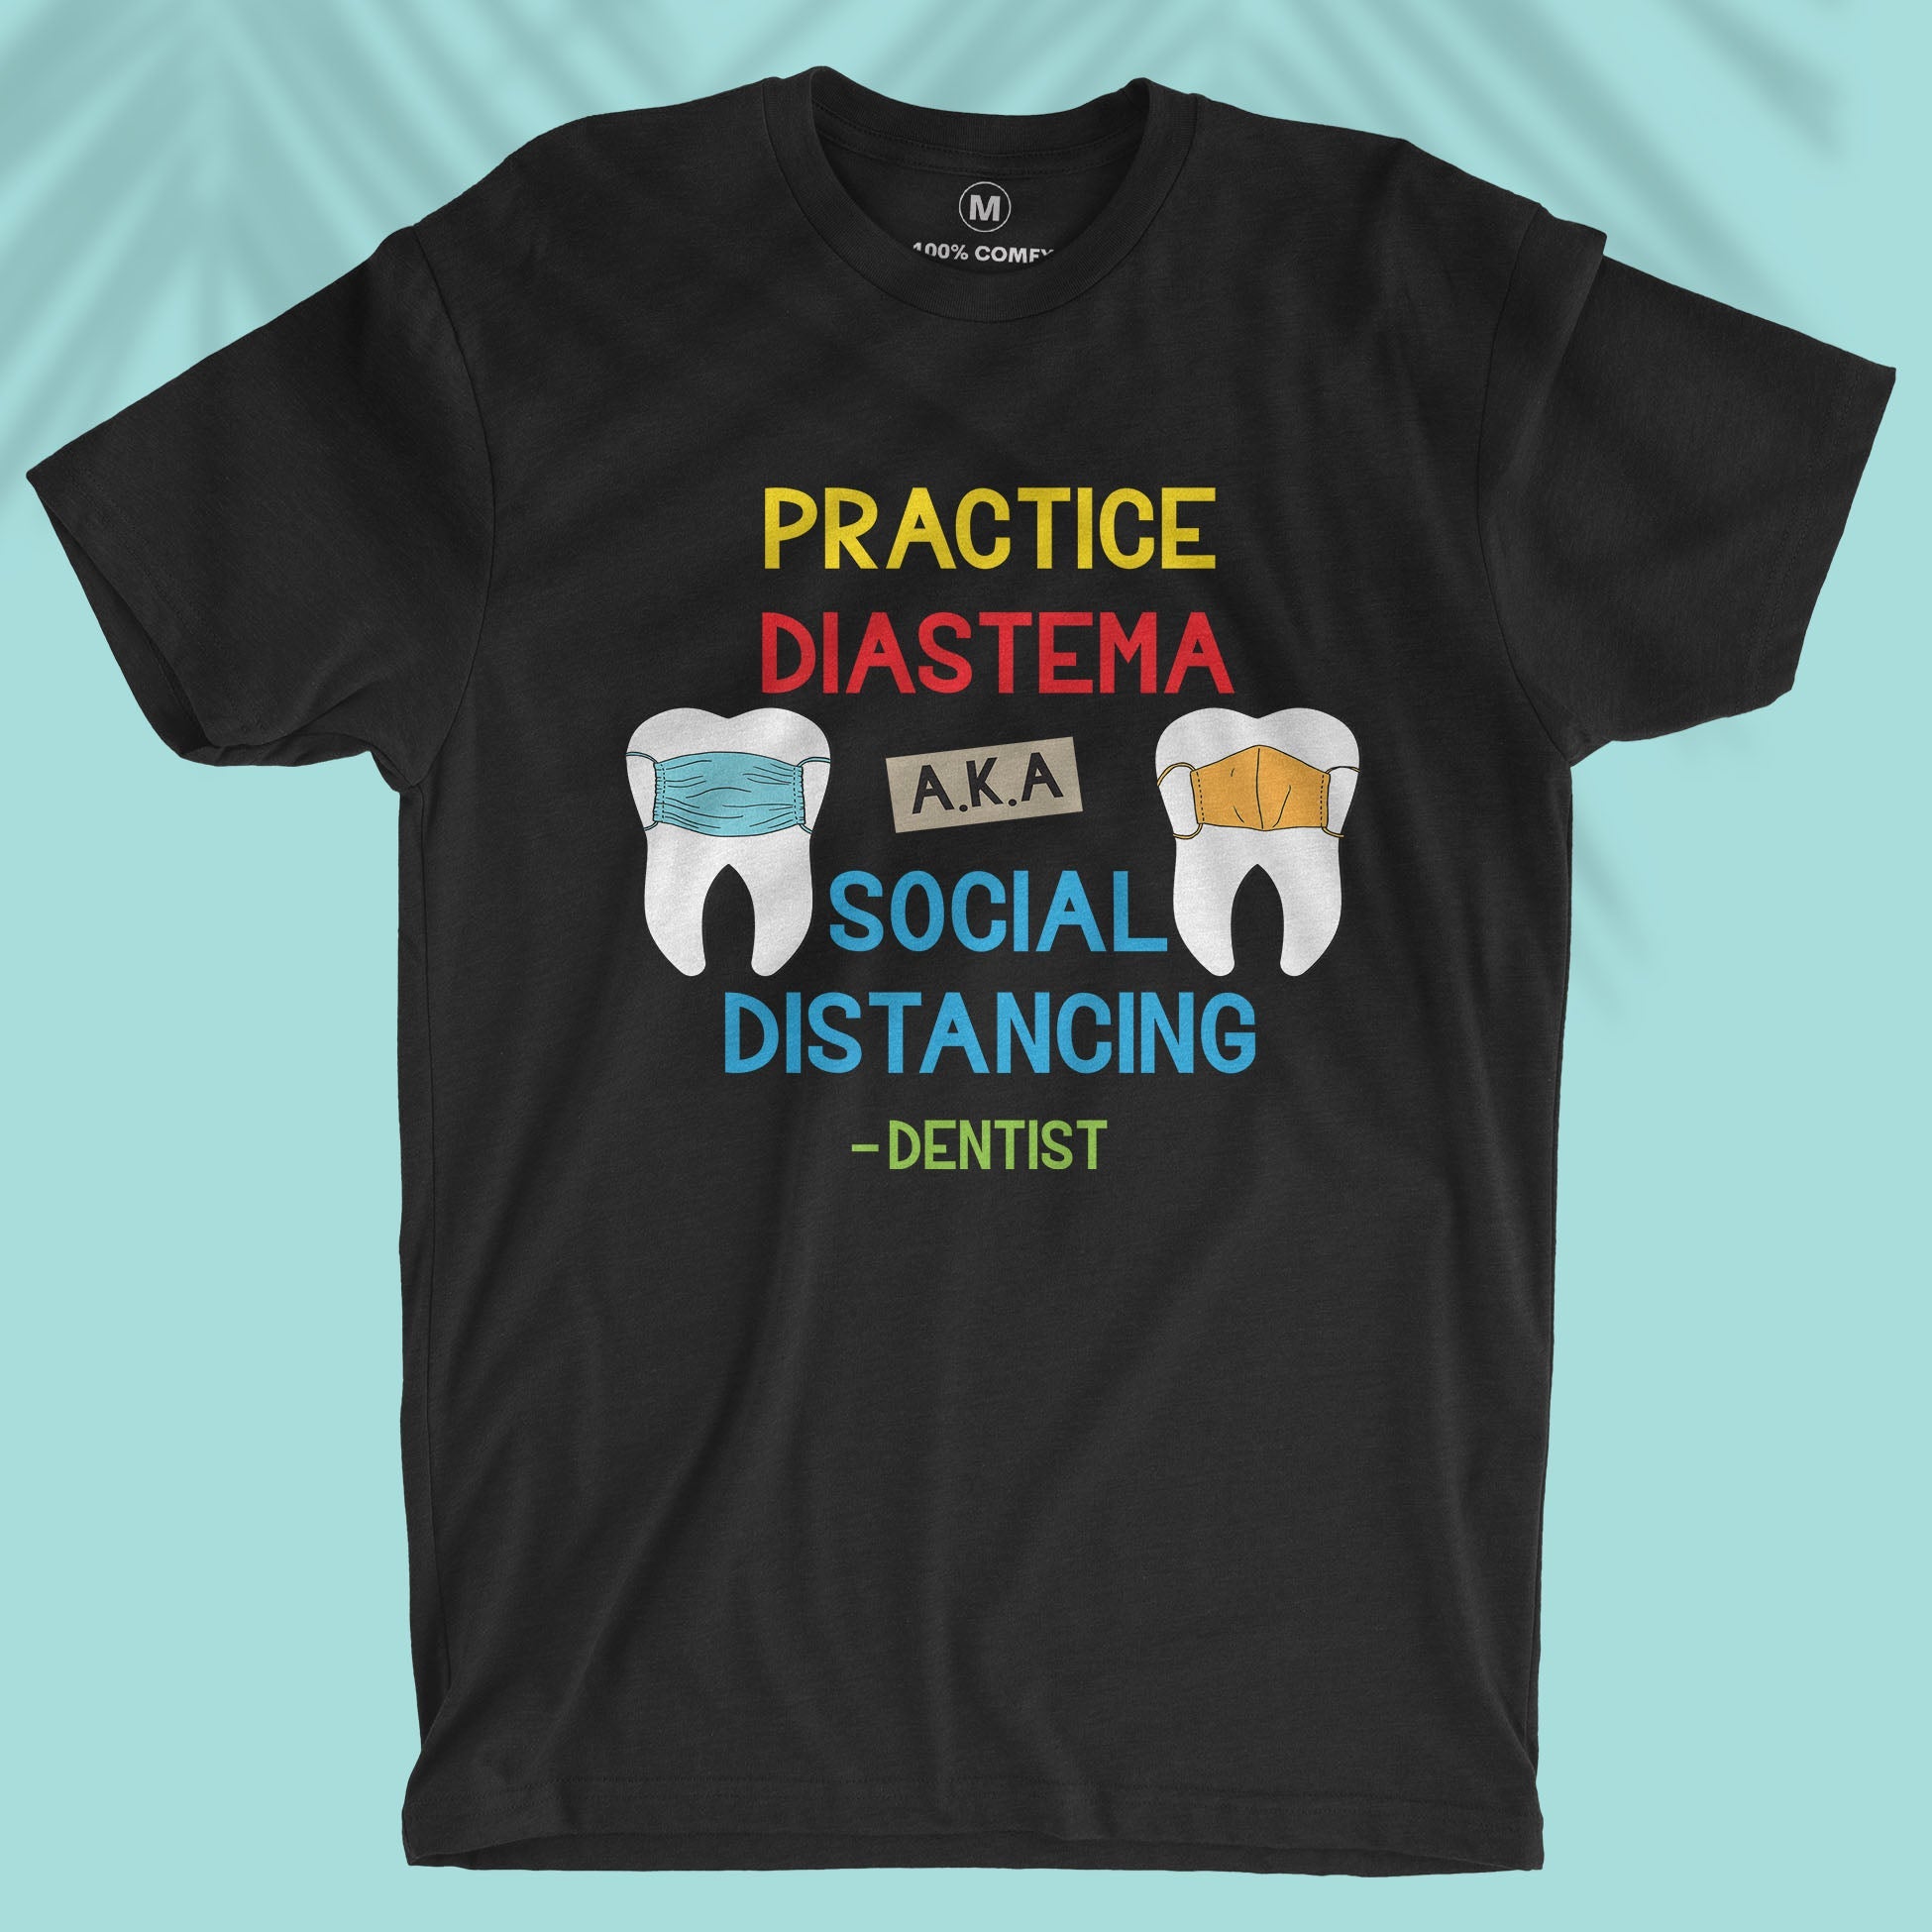 Practice Diastema - Men T-shirt